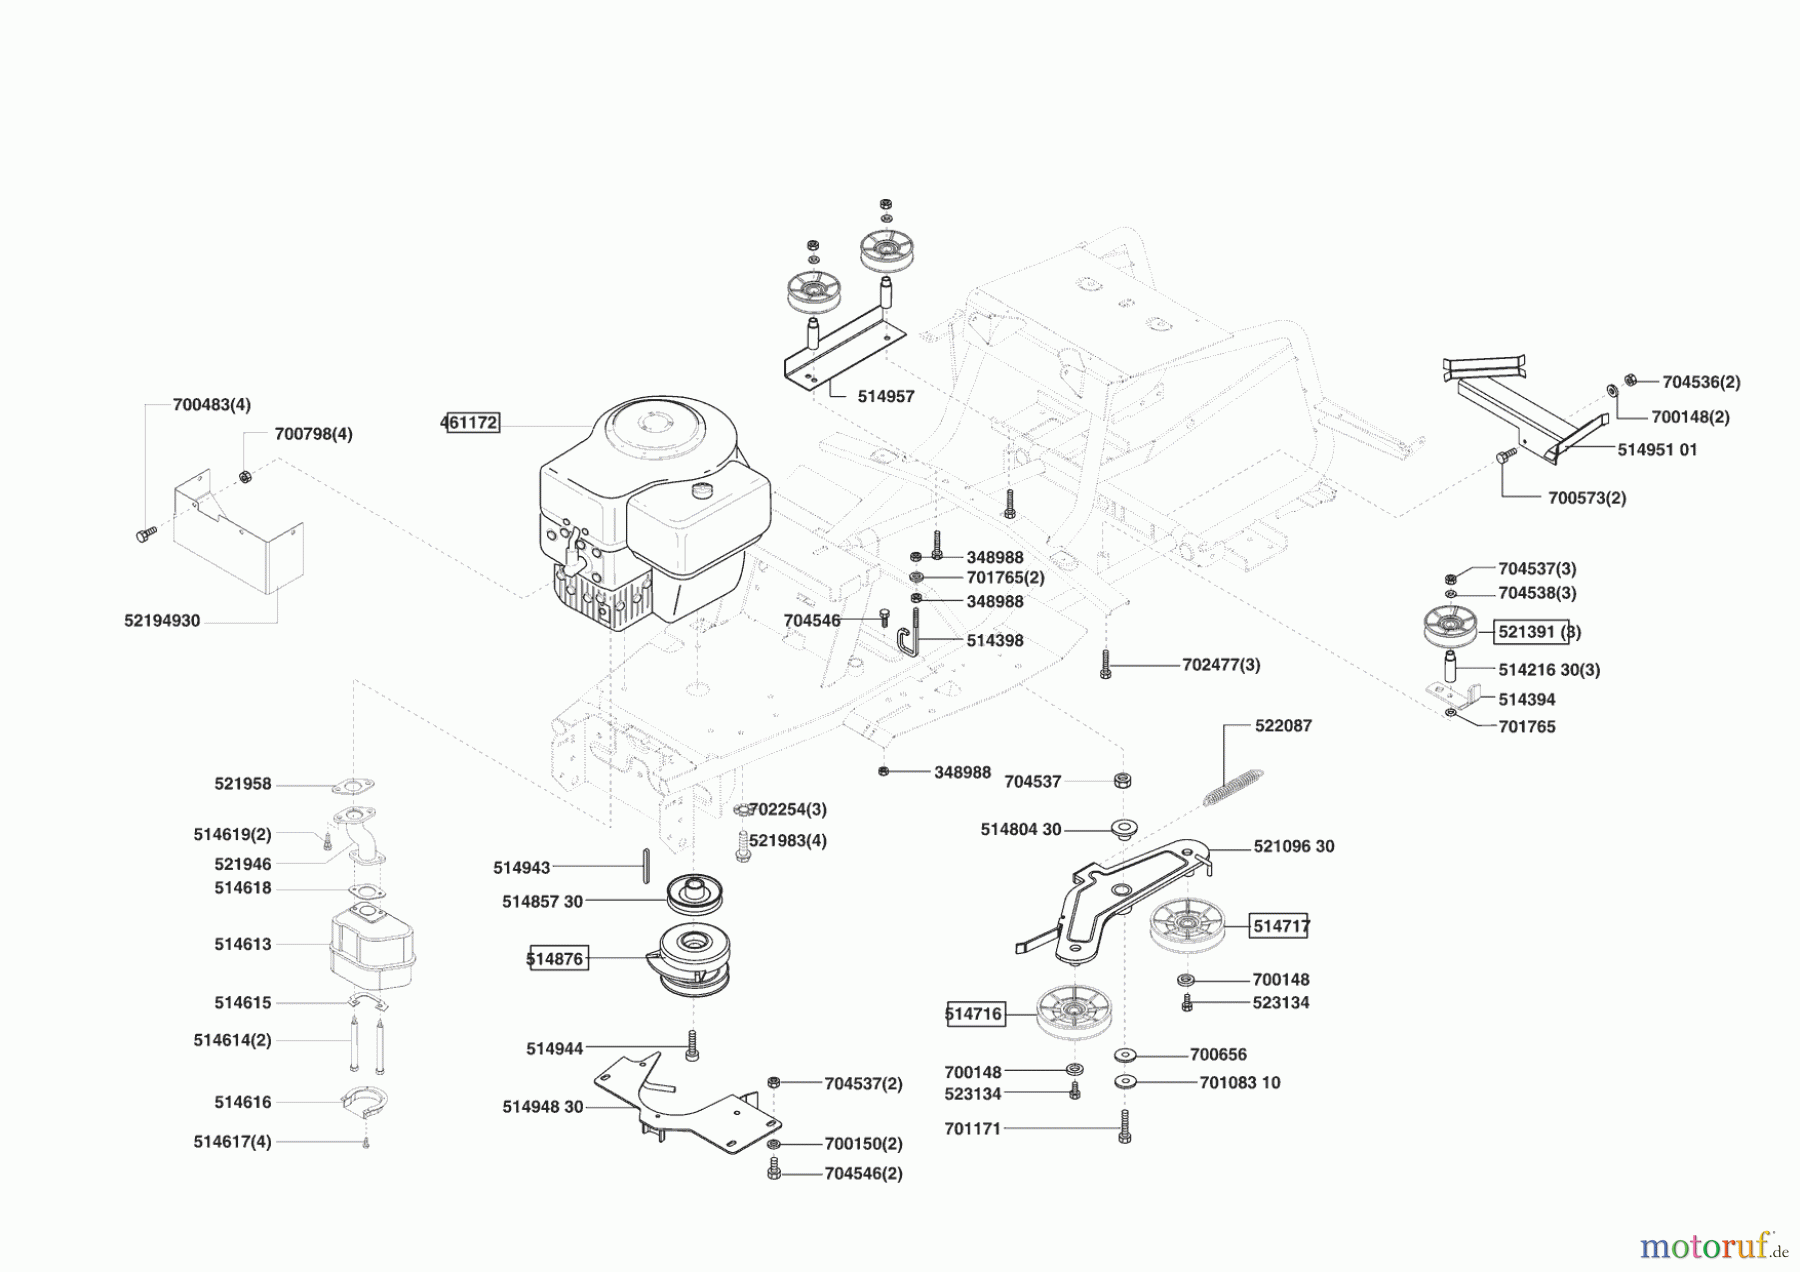  AL-KO Gartentechnik Rasentraktor Comfort T1500 Seite 4